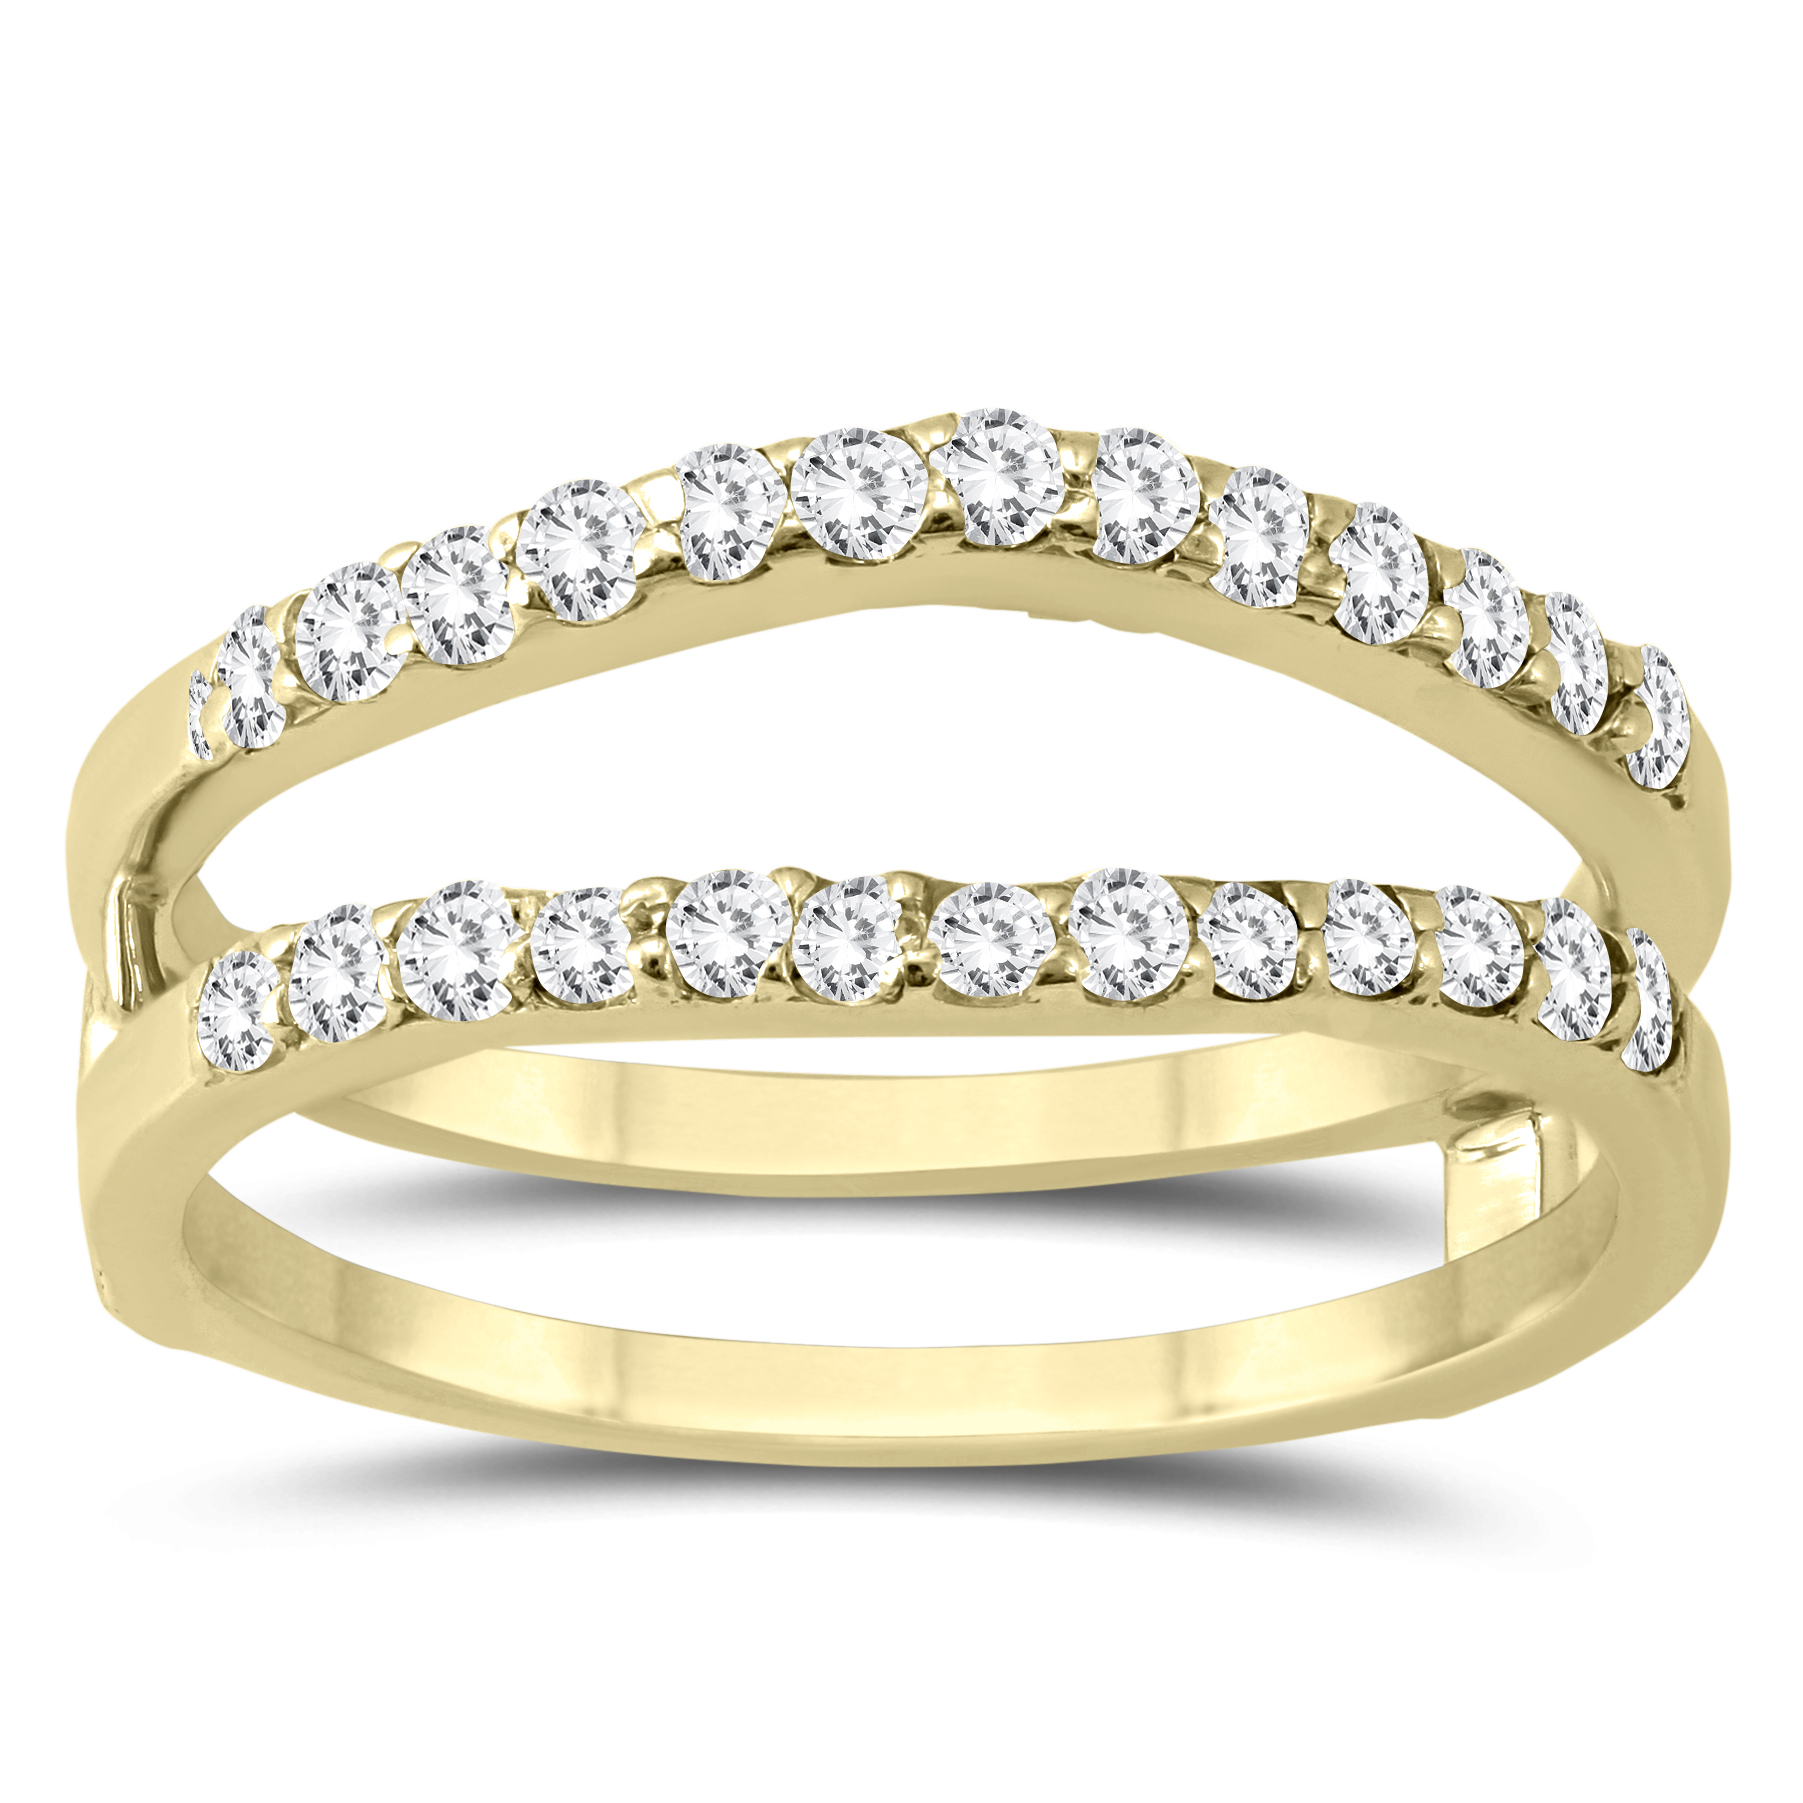 1/2 Carat TW Diamond Insert Ring in 14K Yellow Gold